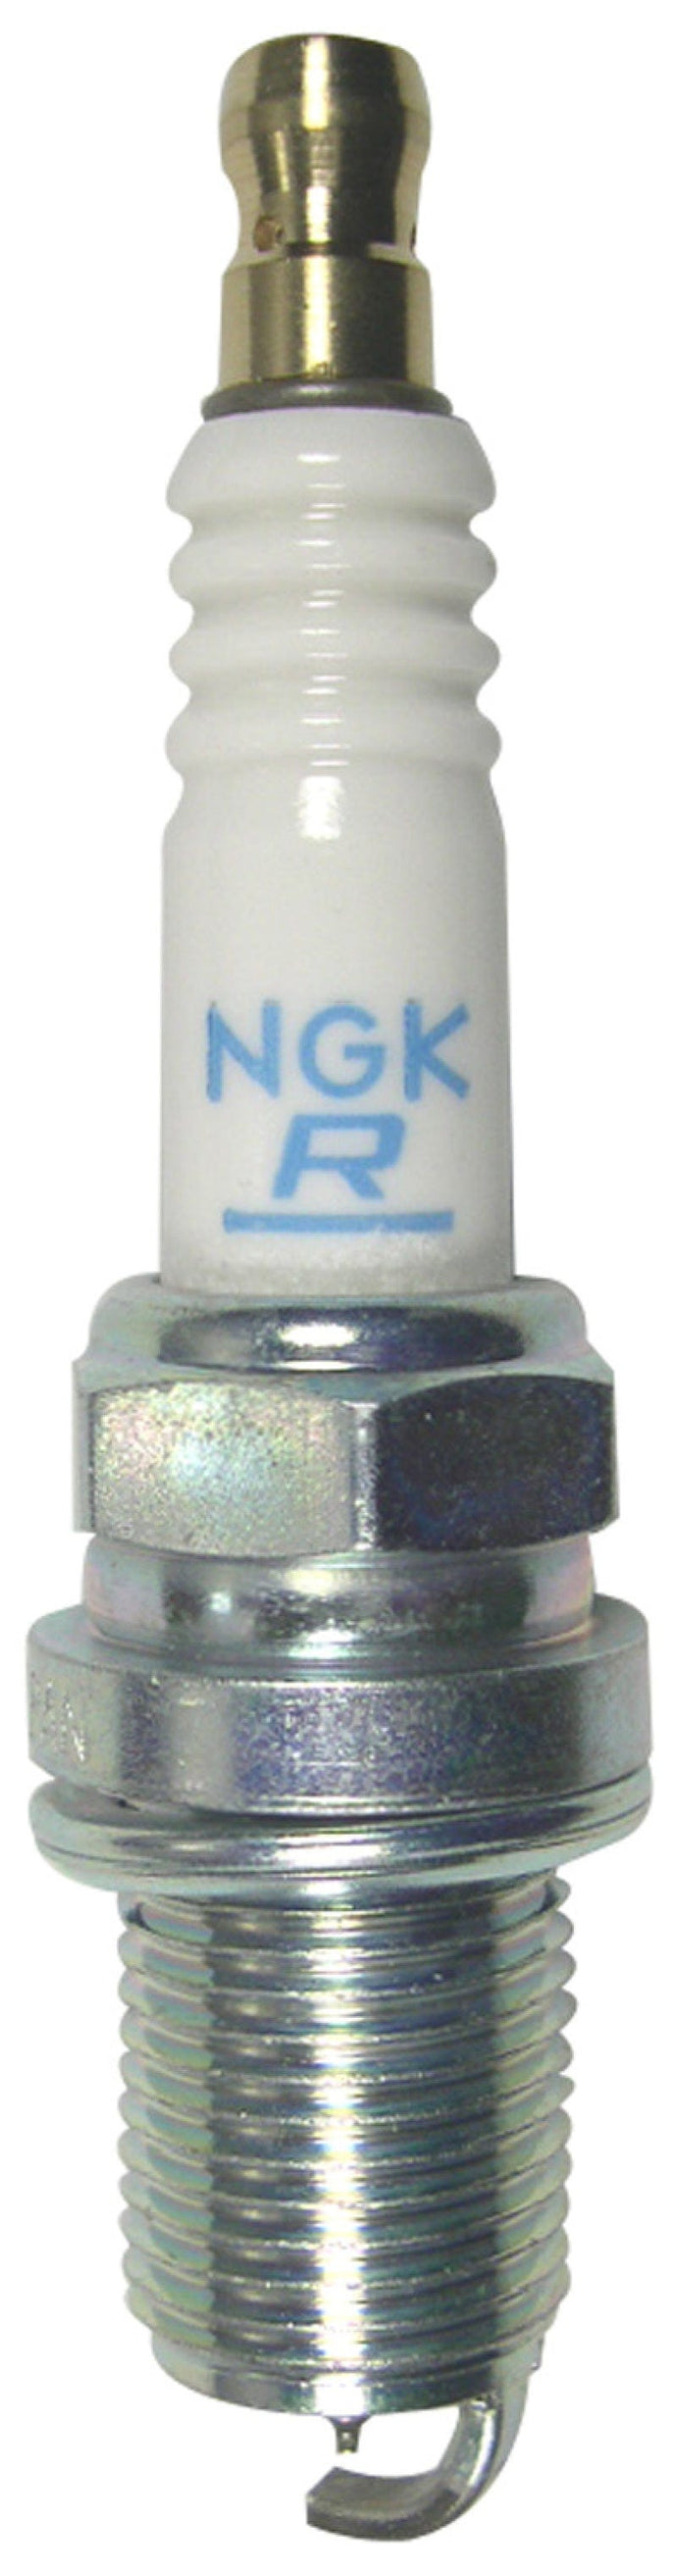 NGK NGK4292